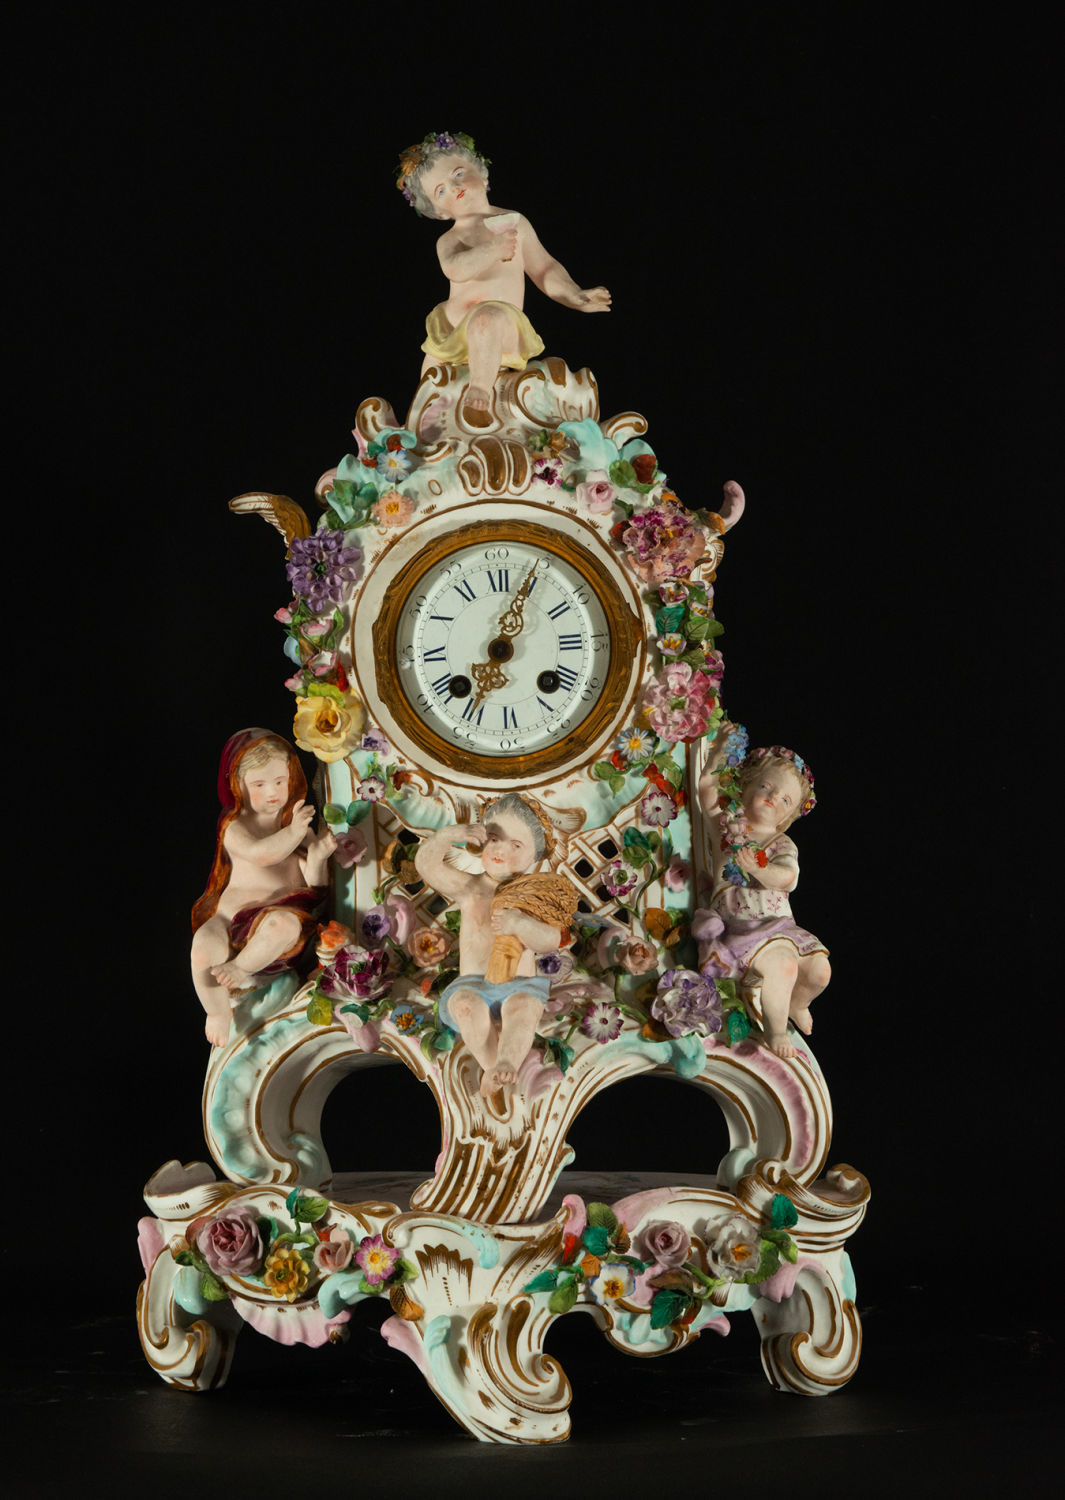 Clock trim and Candelabra in Meissen porcelain with Cherub motifs, 19th century - Image 2 of 16